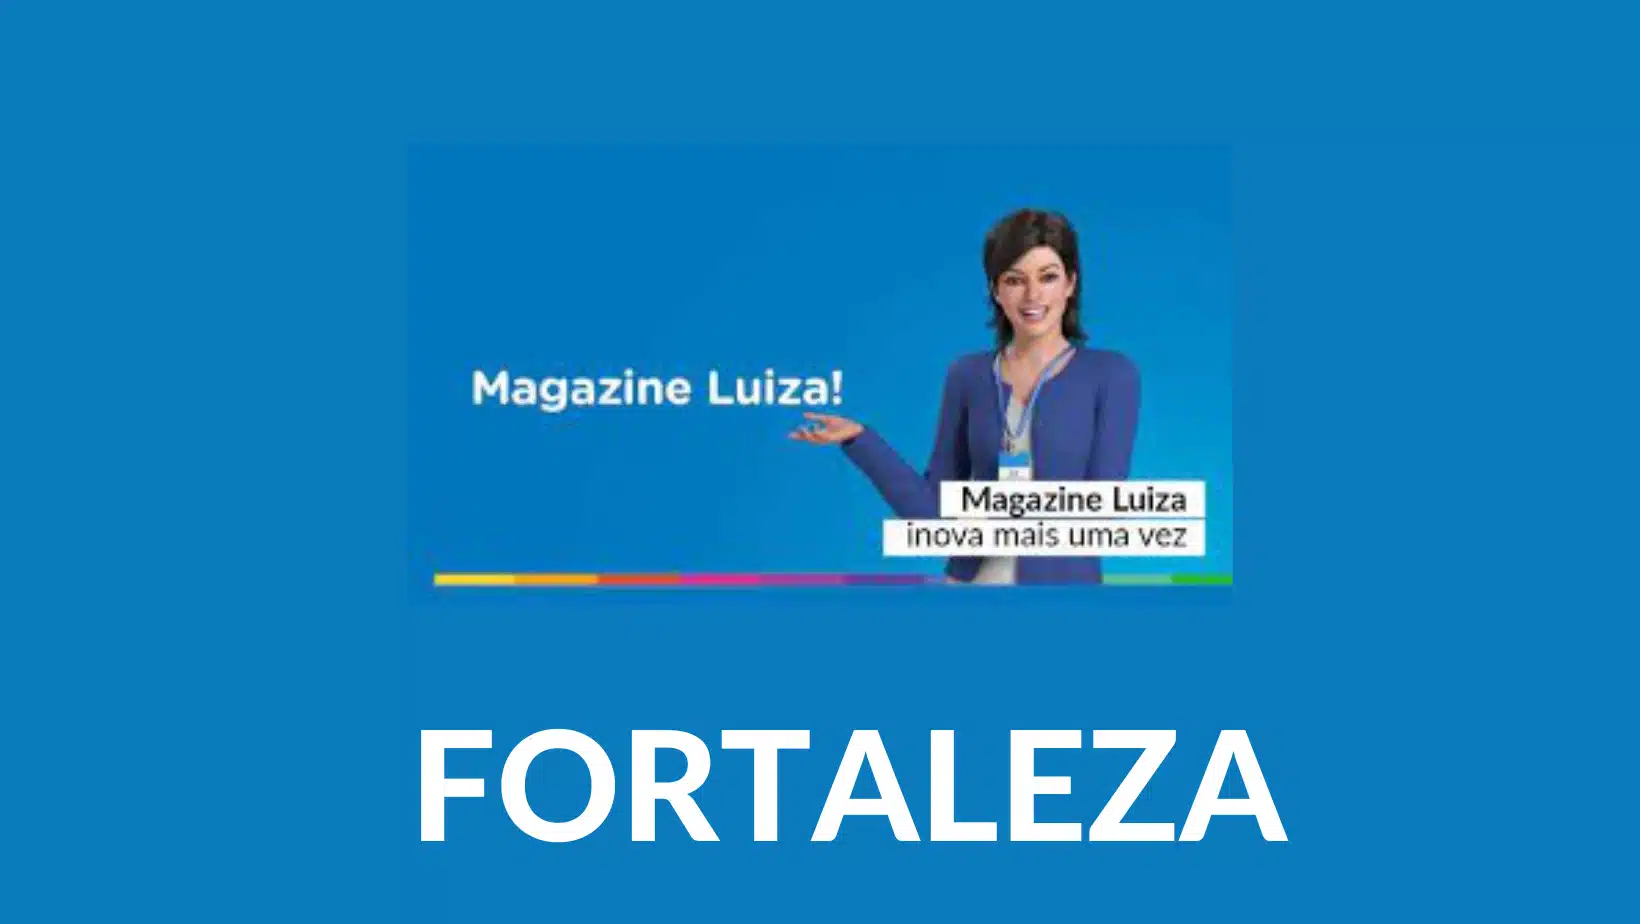 Telefone Magazine Luíza Fortaleza: WhatsApp, SAC, Endereços, 0800